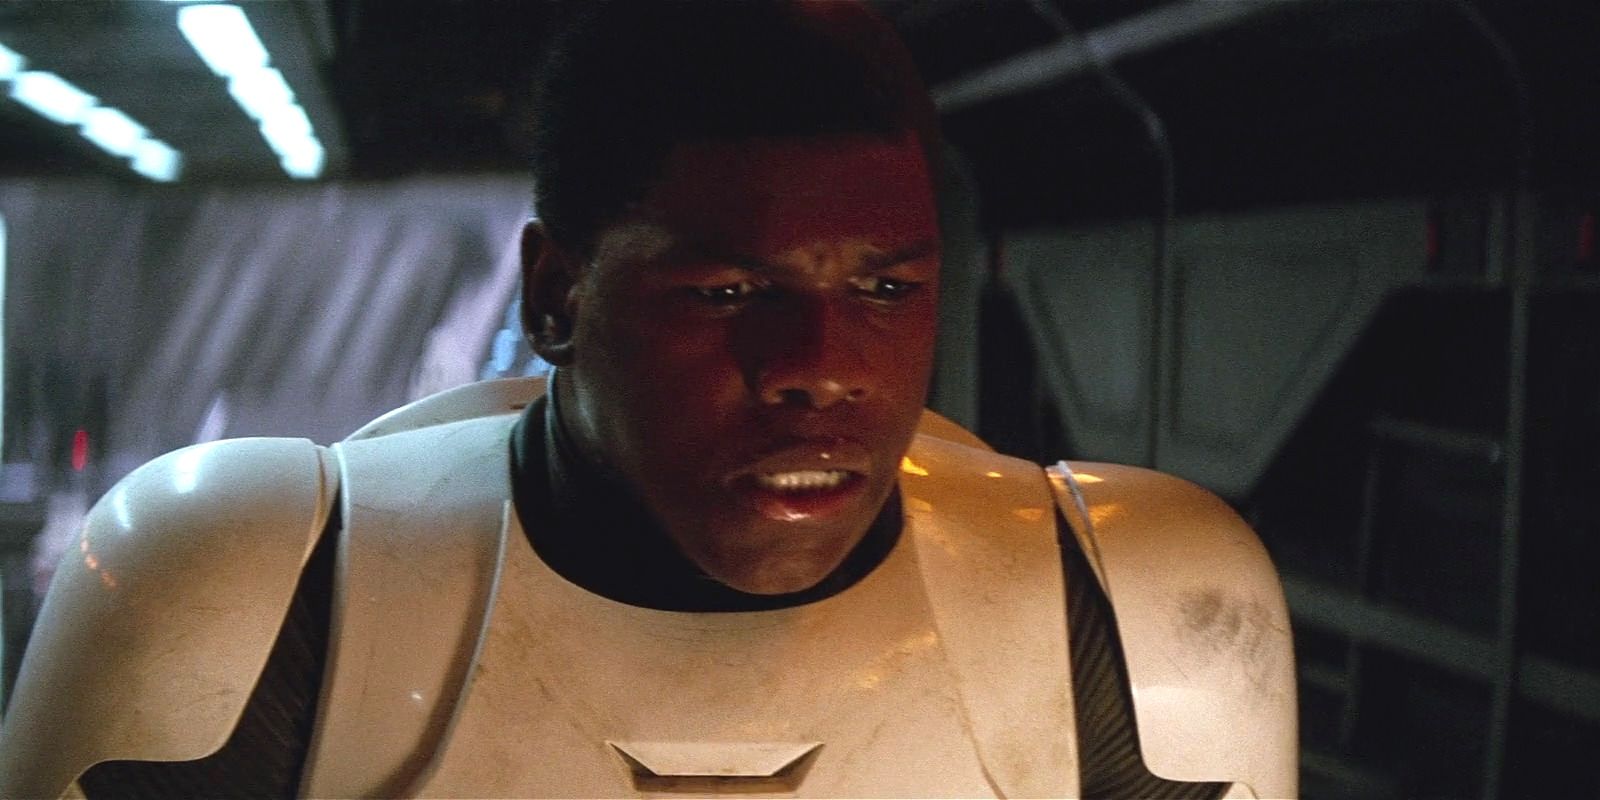 Finn in stormtrooper armor in Star Wars: The Force Awakens